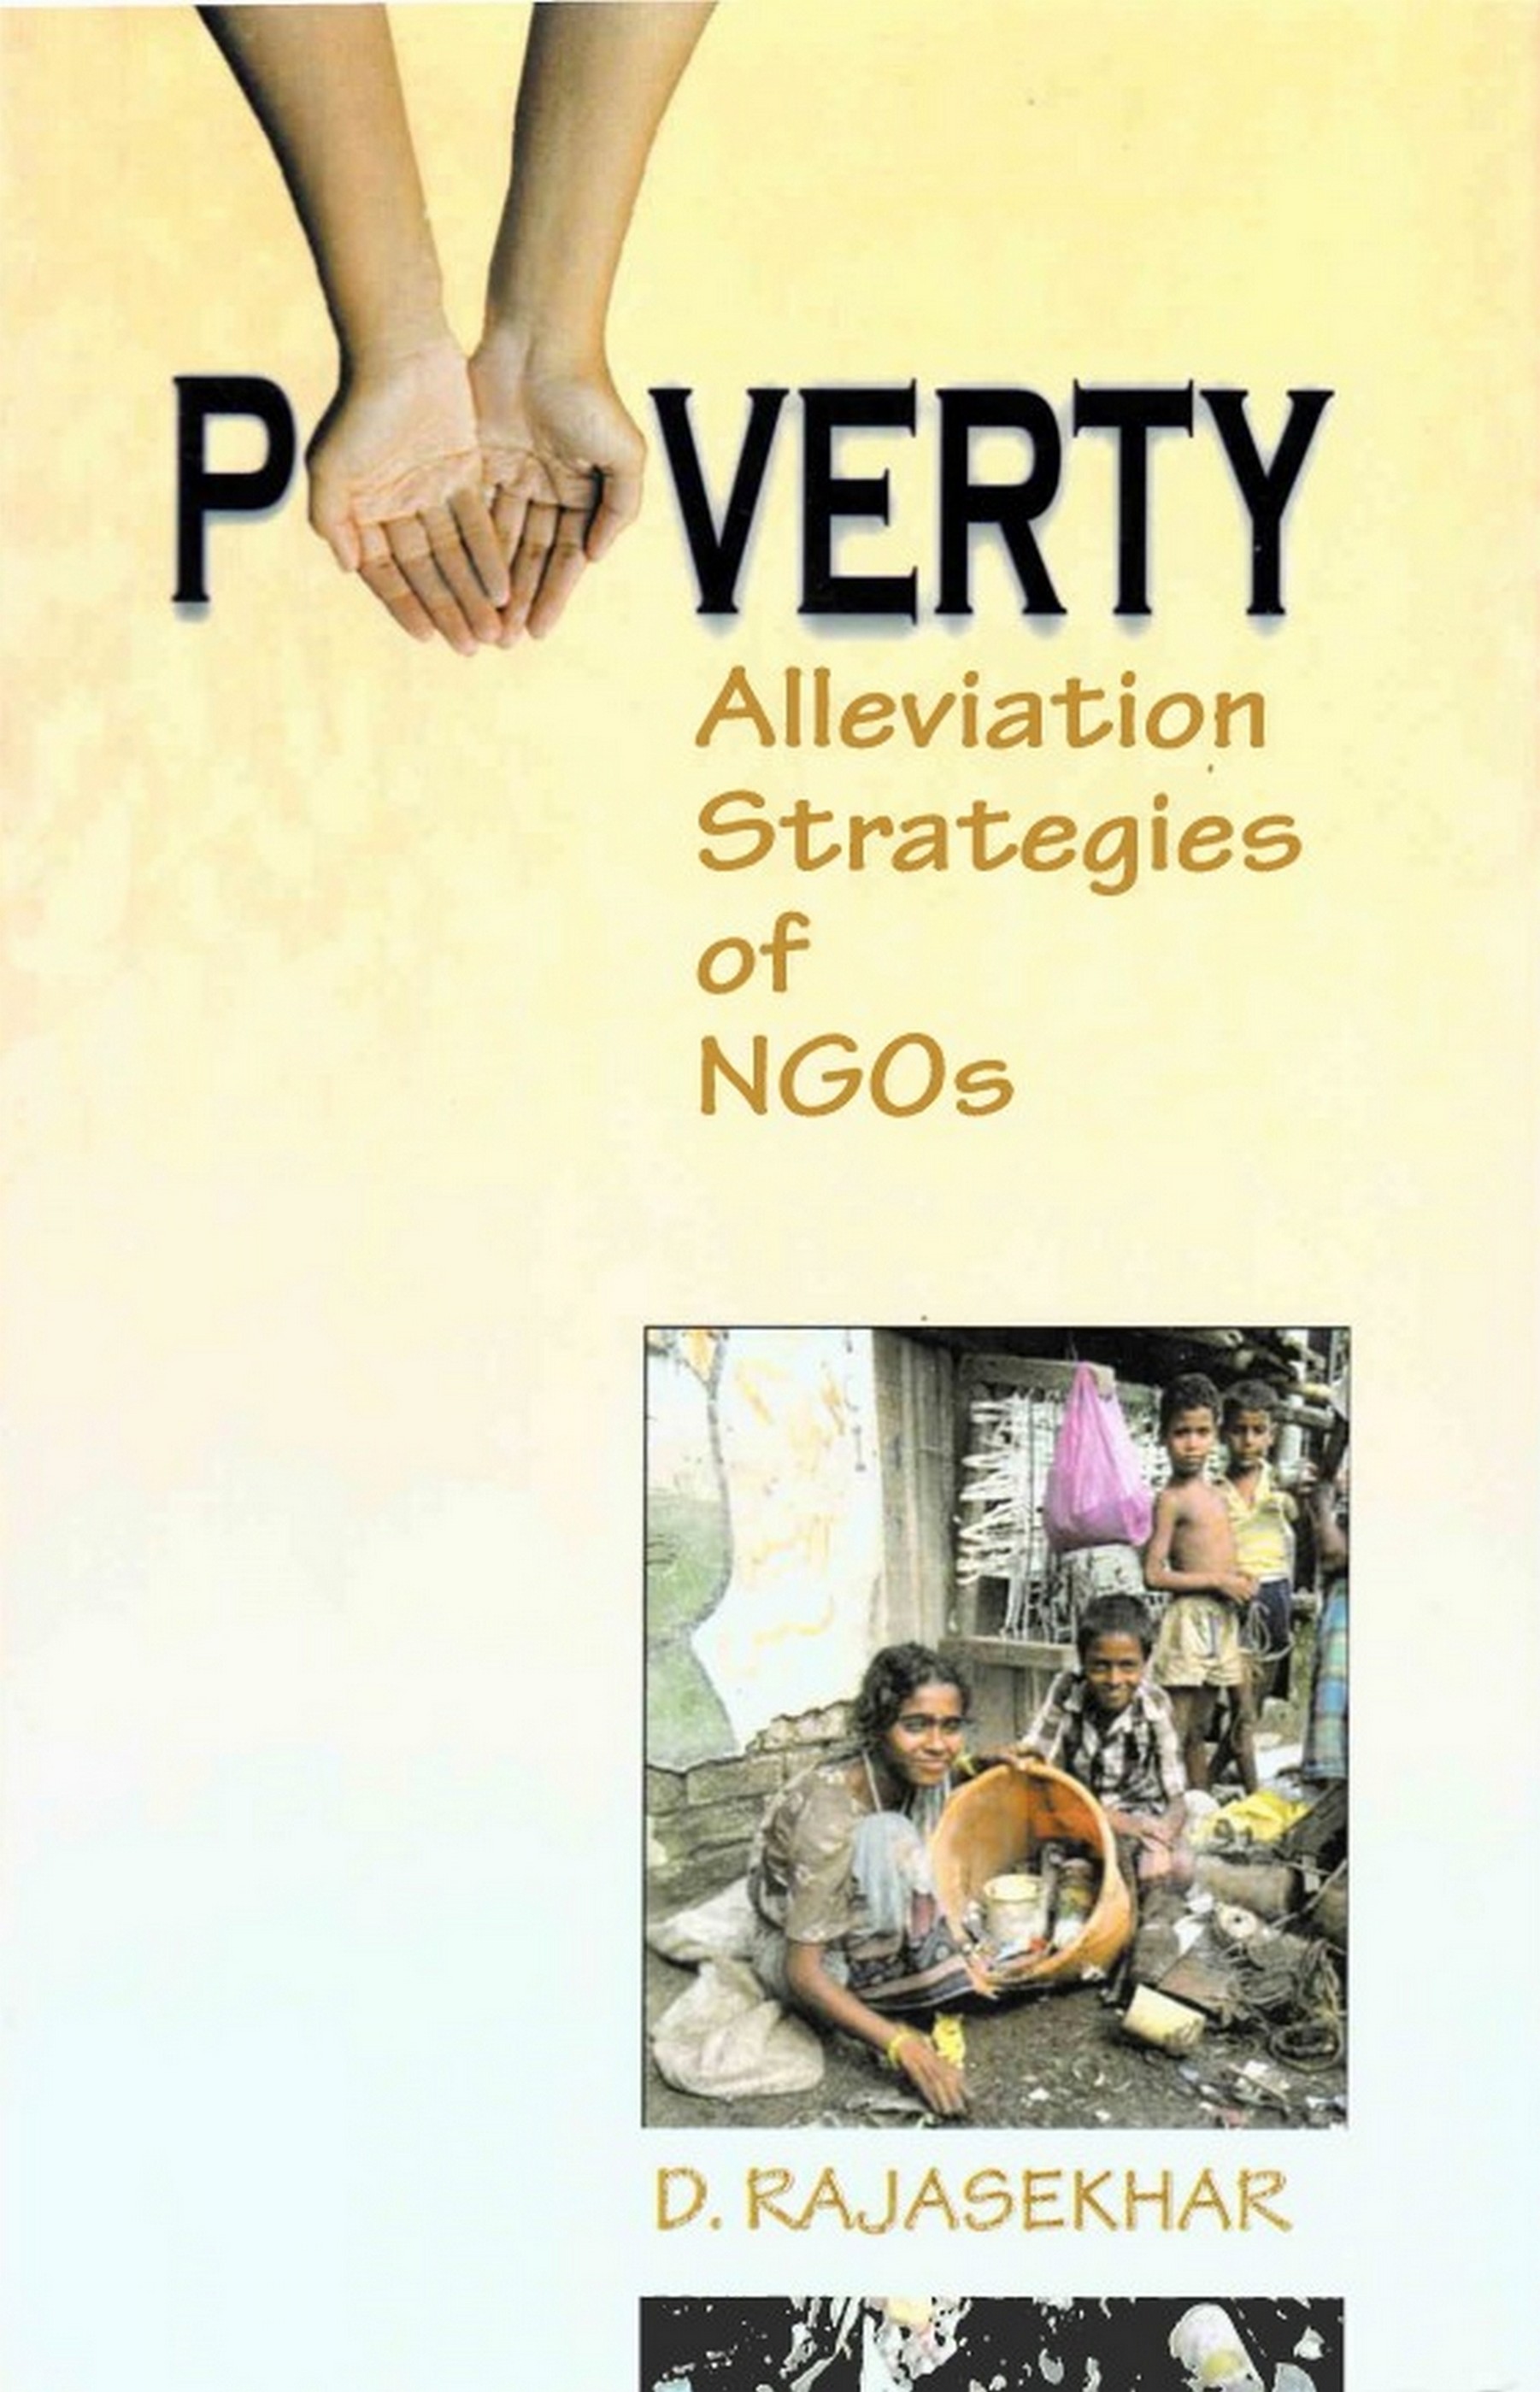 Poverty Alleviation Strategies of NGOs